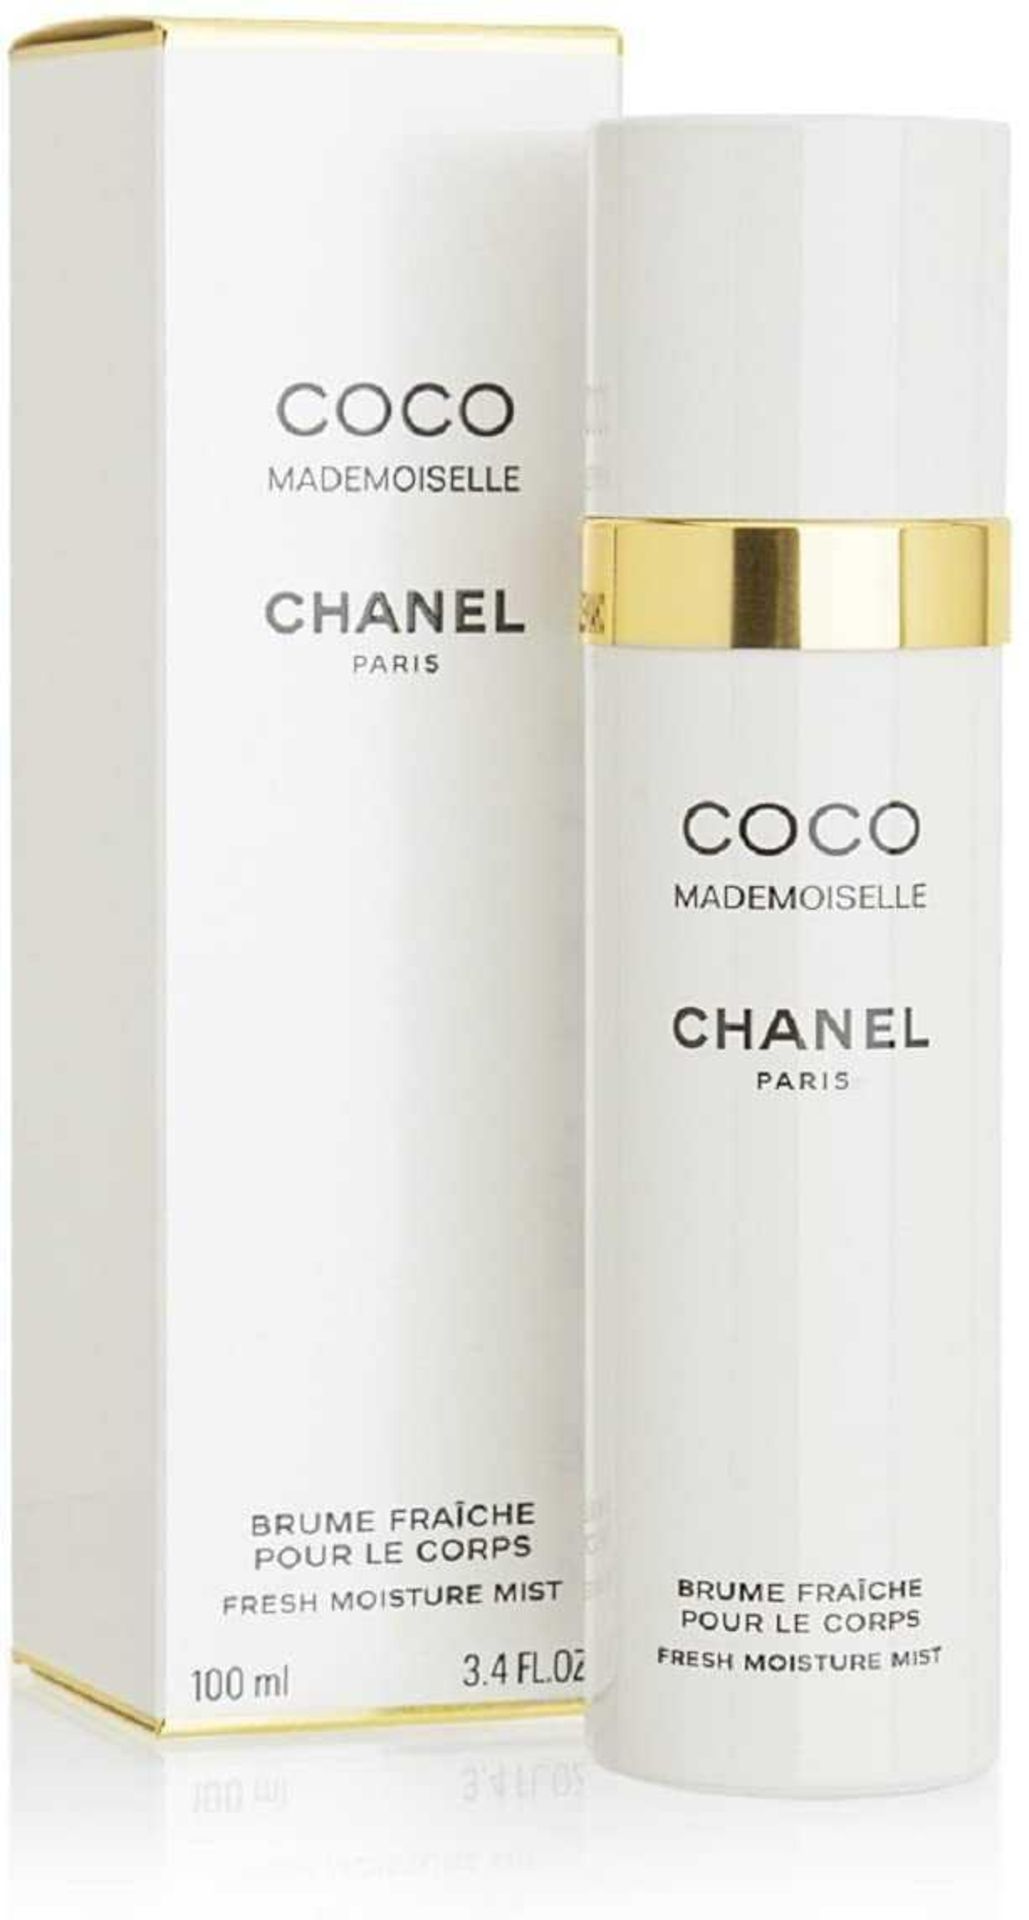 RRP £40 Boxed/Sealed Bottle Of Coco Chanel Paris Mademoiselles 100Ml Fresh Moisture Mist